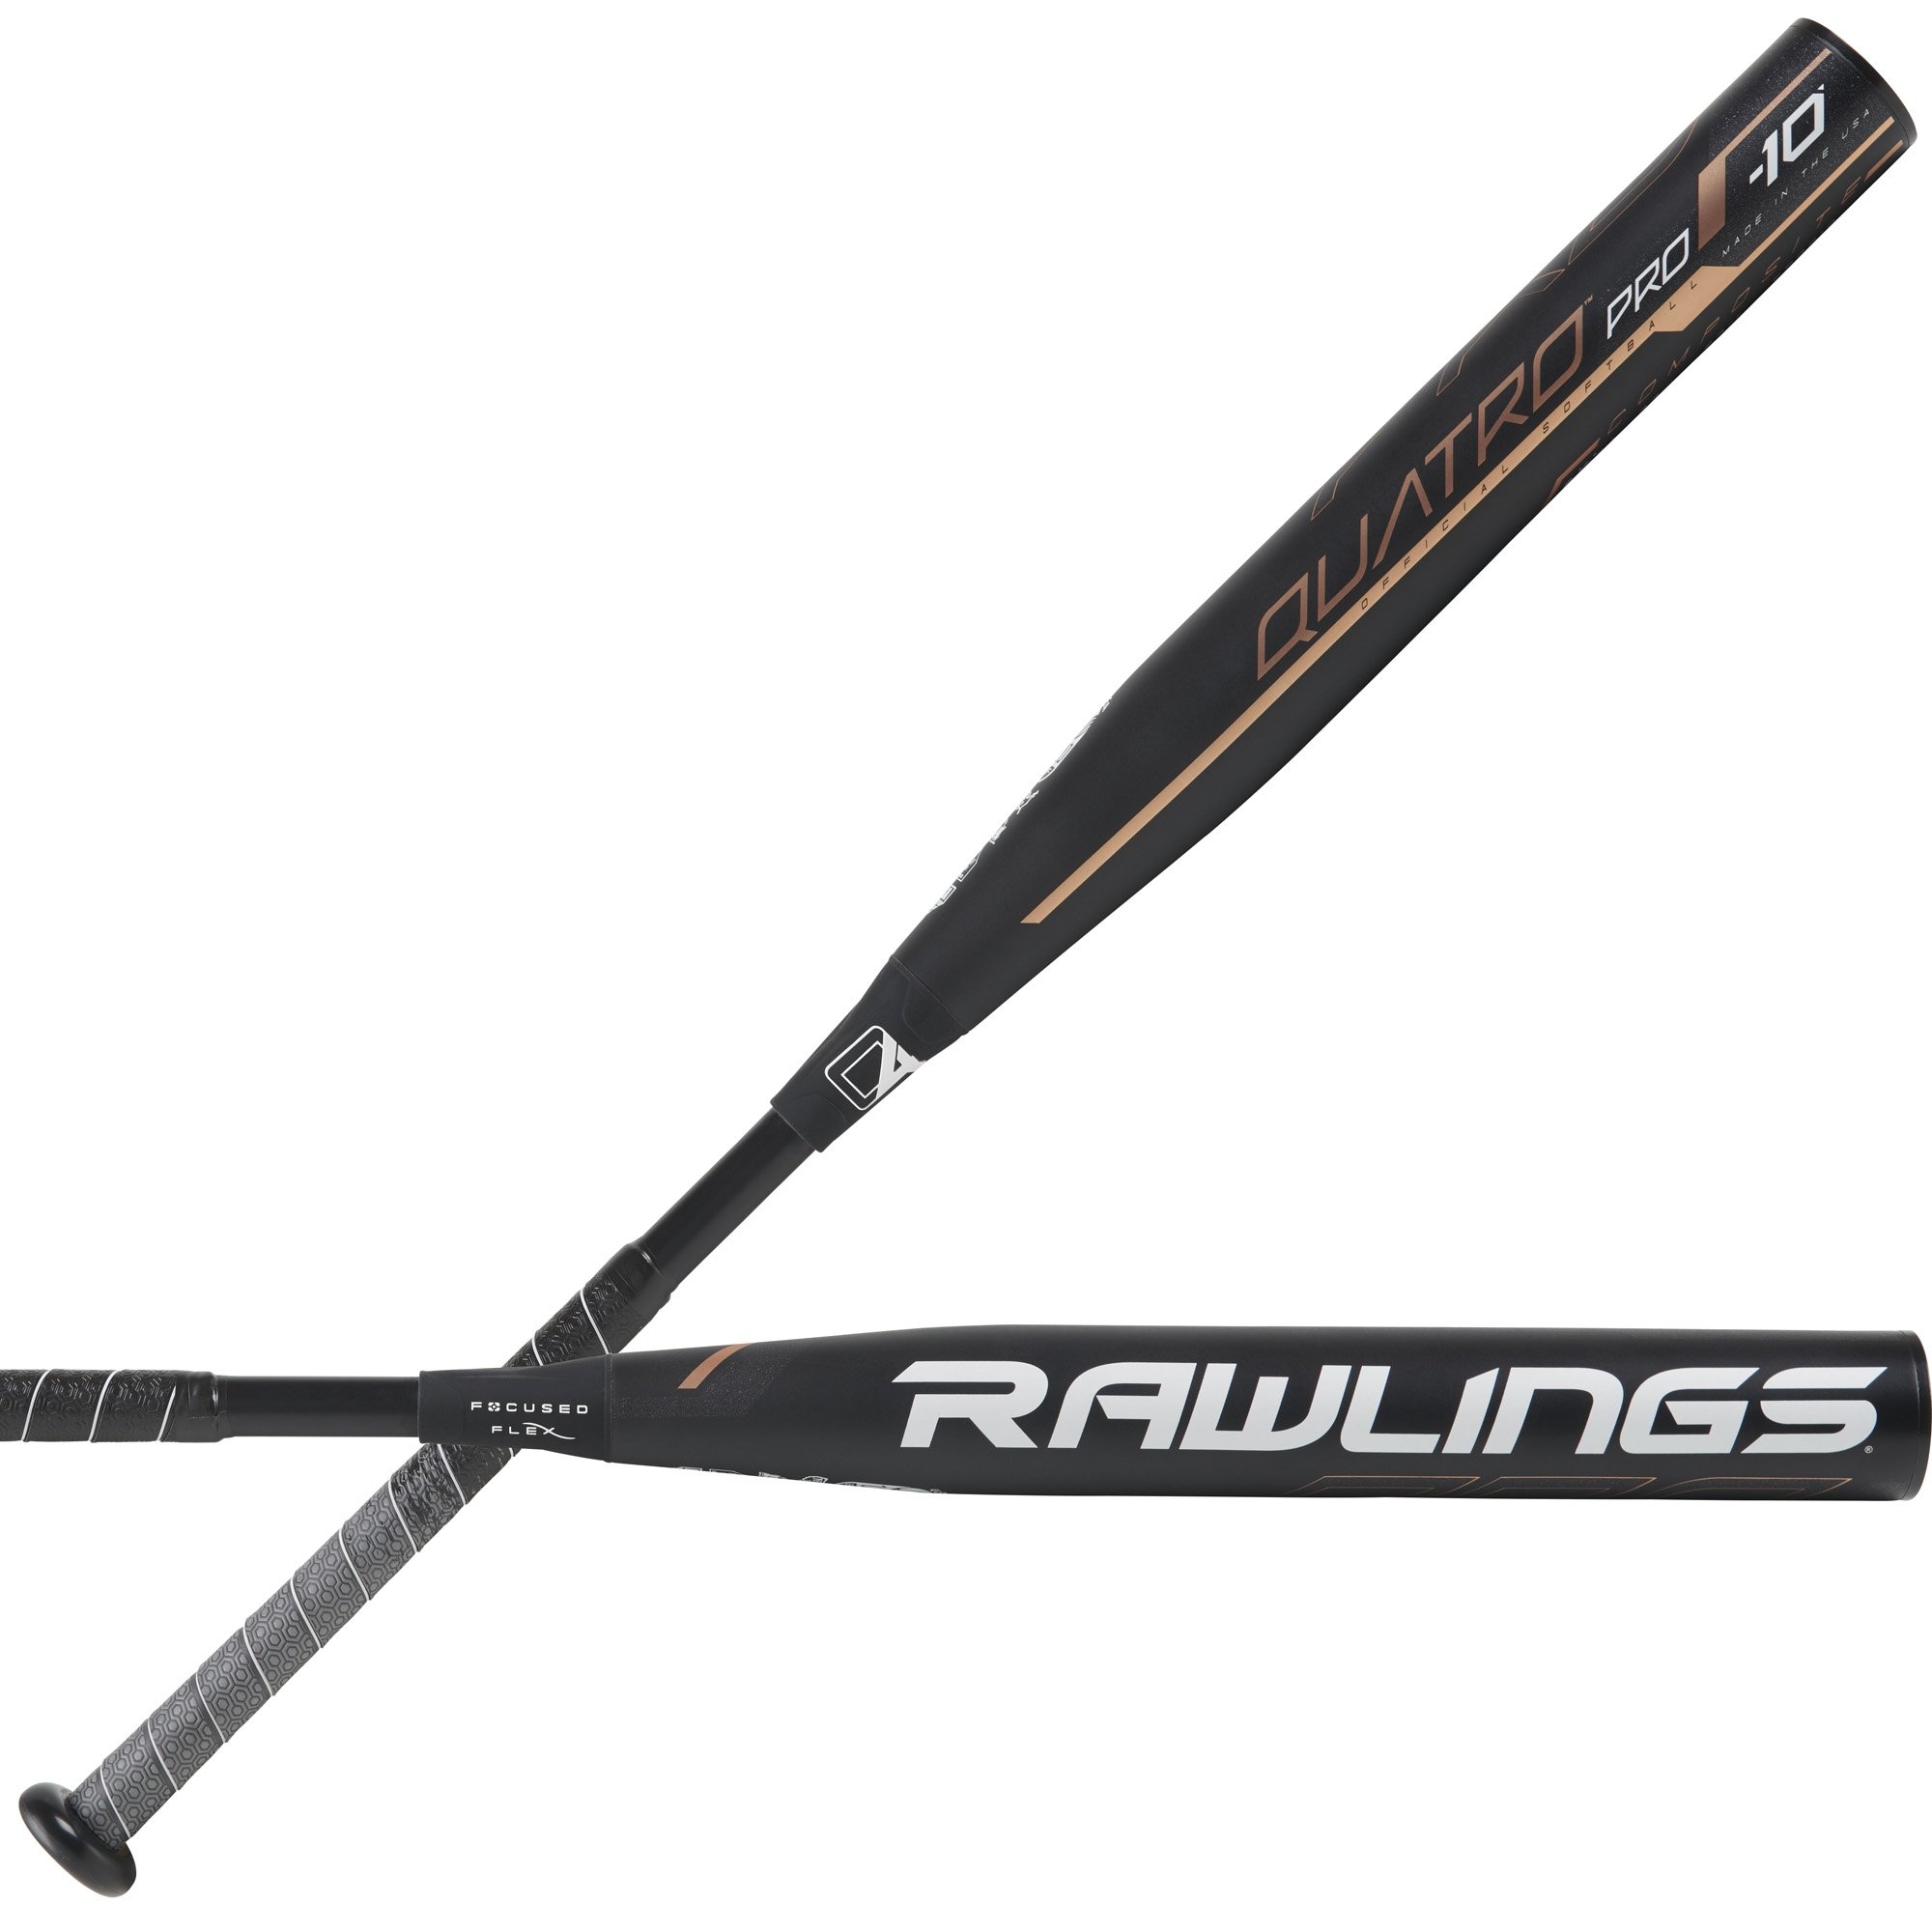 2019 Rawlings Quatro Pro Composite Fastpitch Softball Bat Fpqp10 31/21 NIW Rec for sale online 